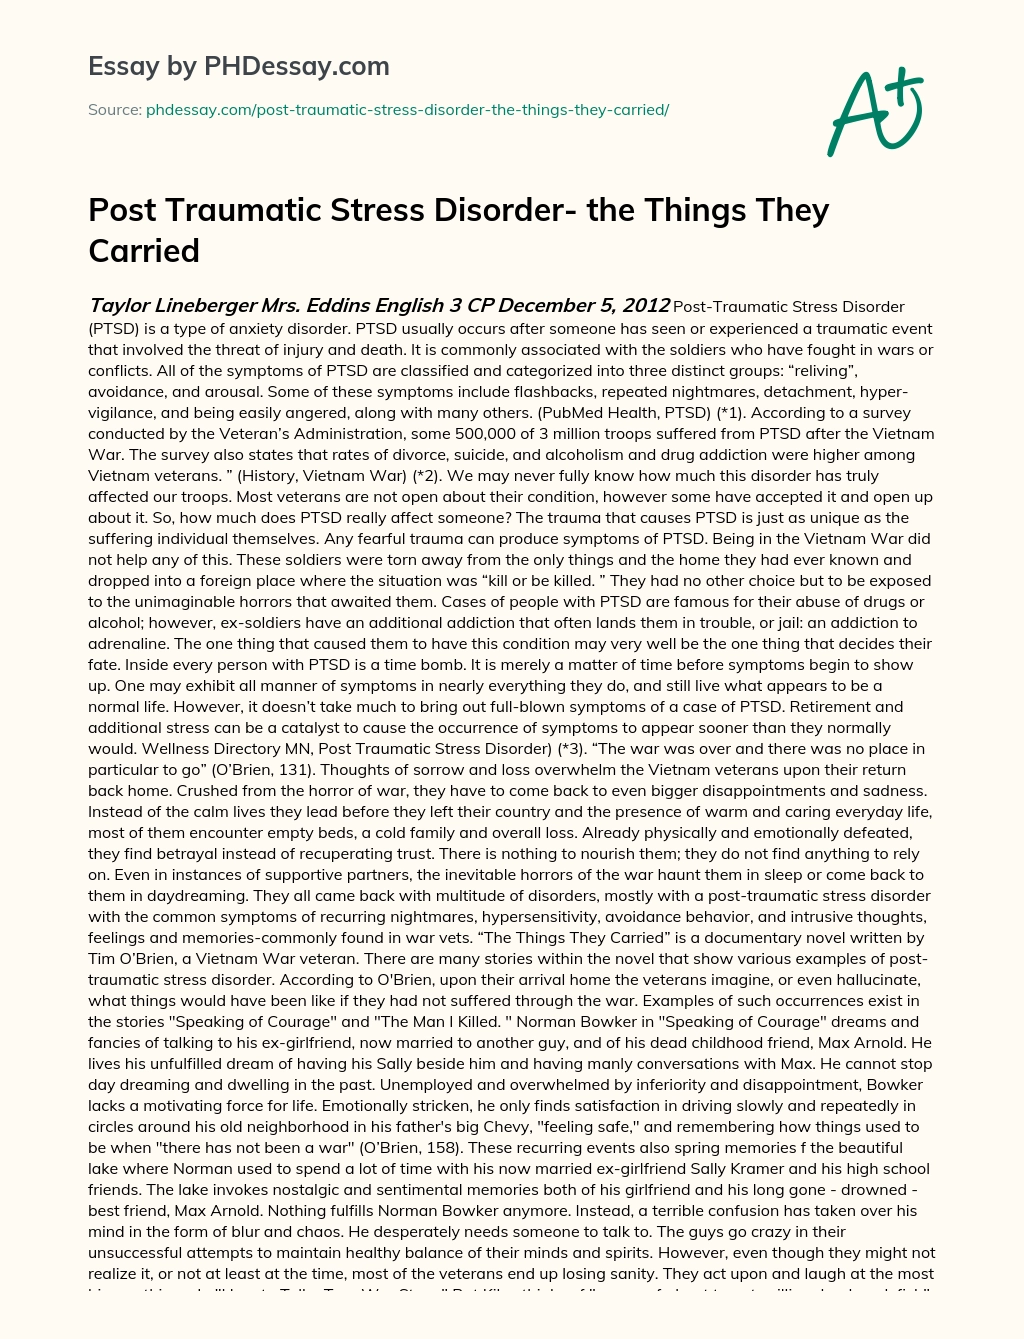 Post Traumatic Stress Disorder essay